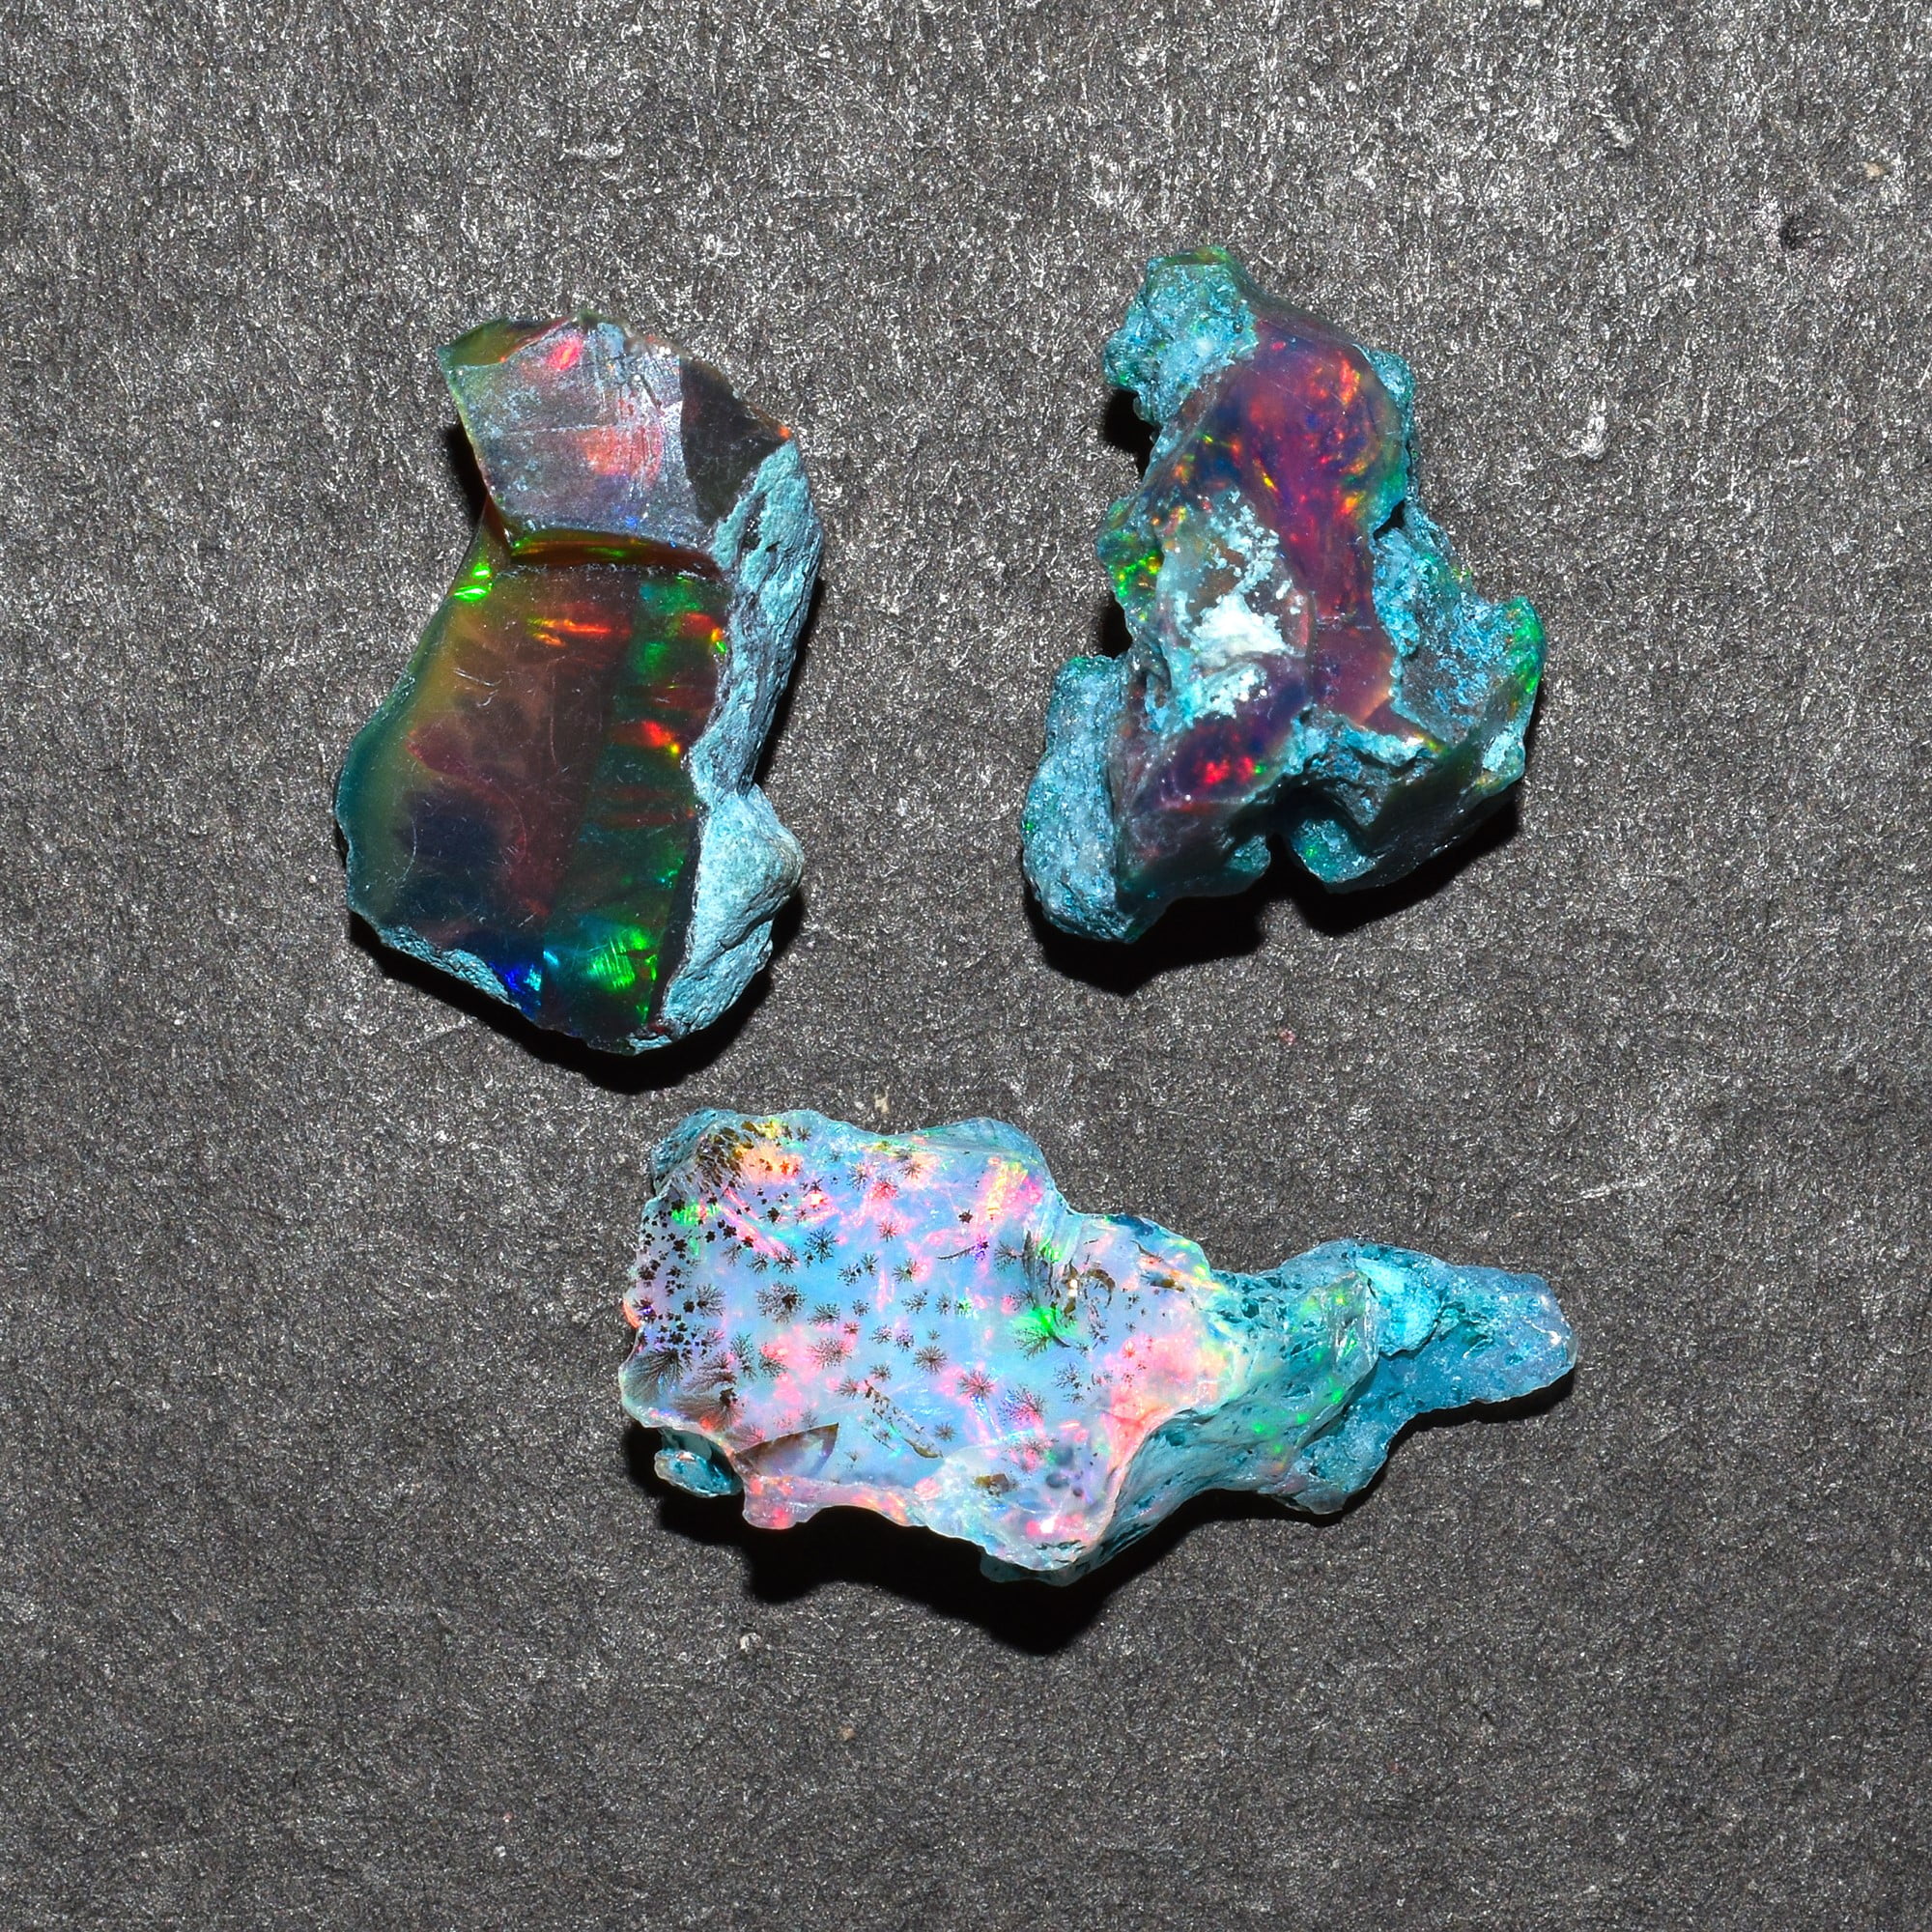 Mix Fire 5 Gram Genuine Natural AAA Grade Opal Gram Lot Ultra Fire Striking Opal Opal Rock Raw Opal Crystals Reiki Crystals and Healing Stones,Jewelry Making Gemstone 